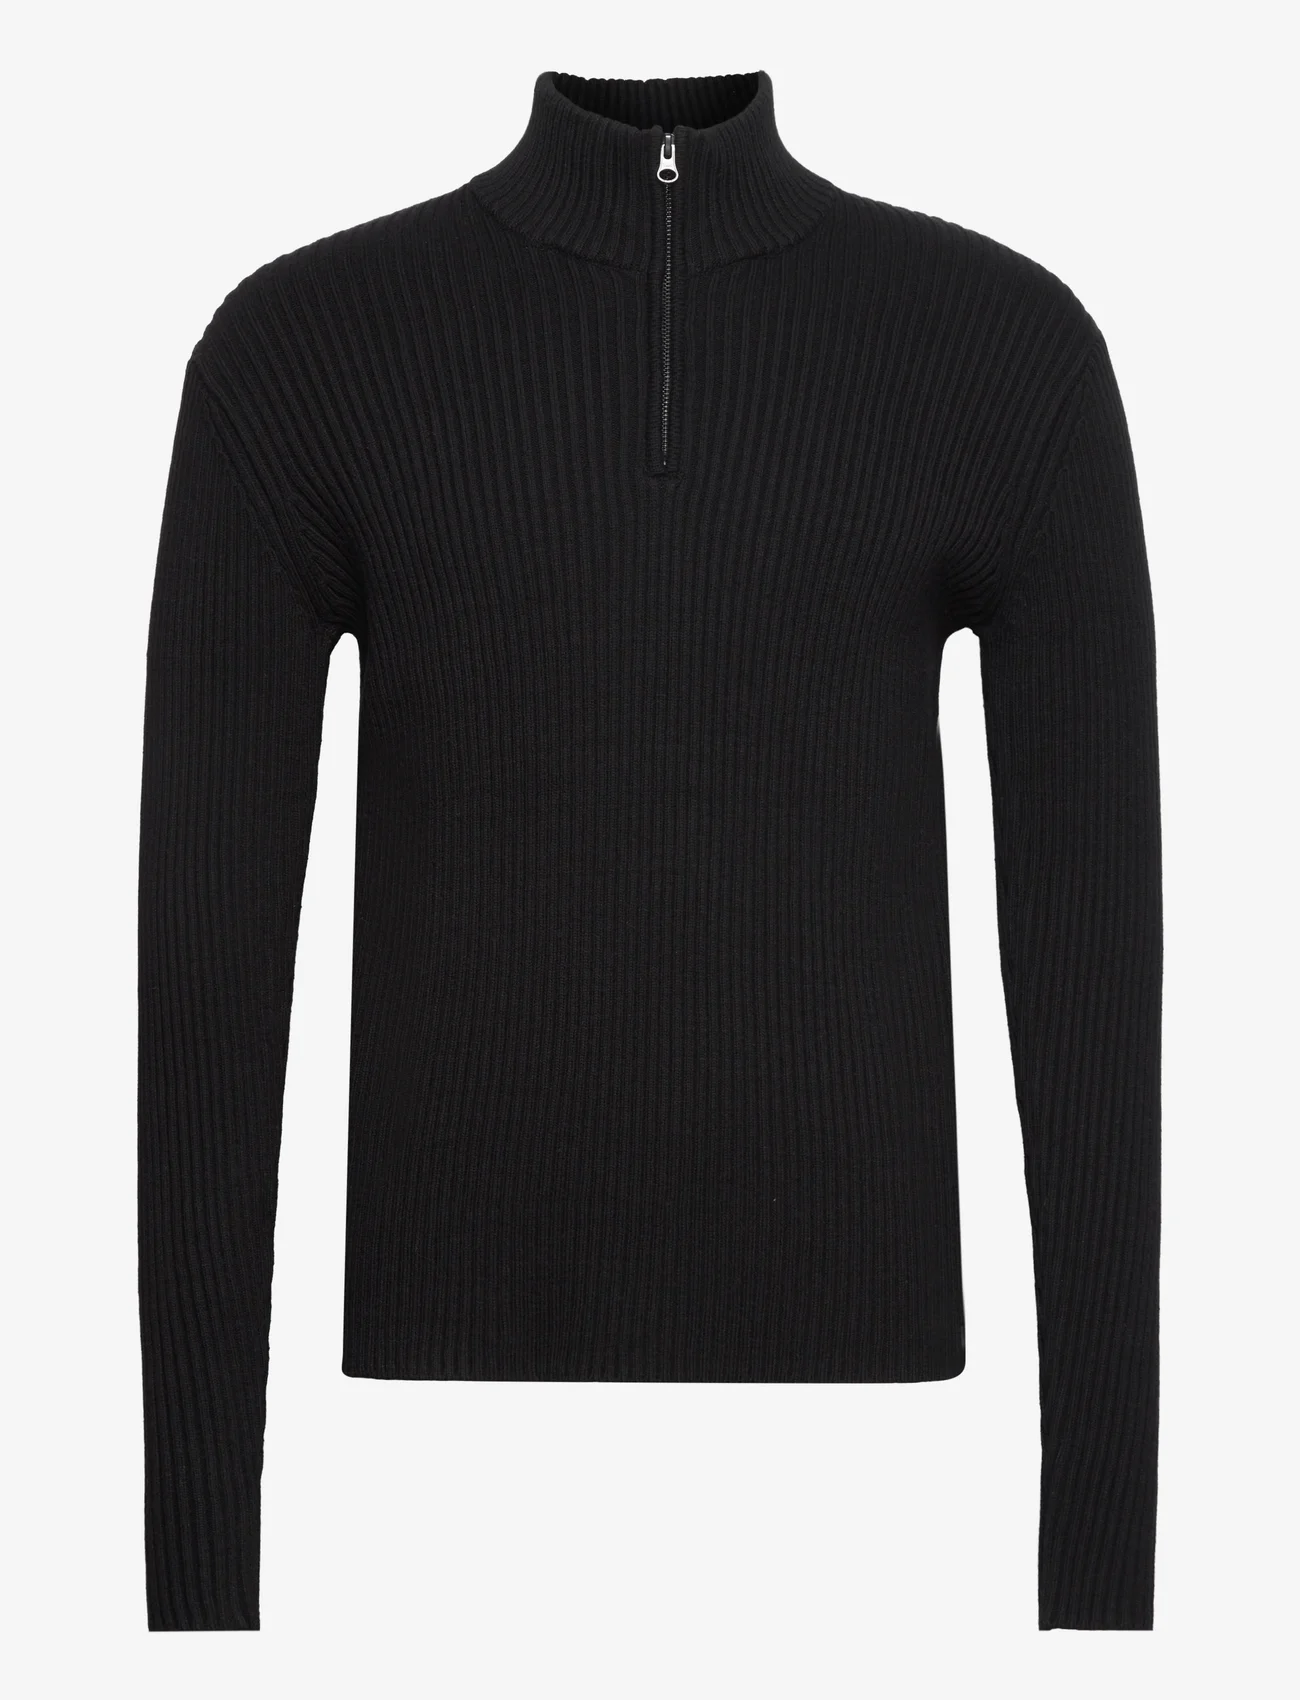 Bruuns Bazaar - SimBBBilly zip knit - men - black - 0